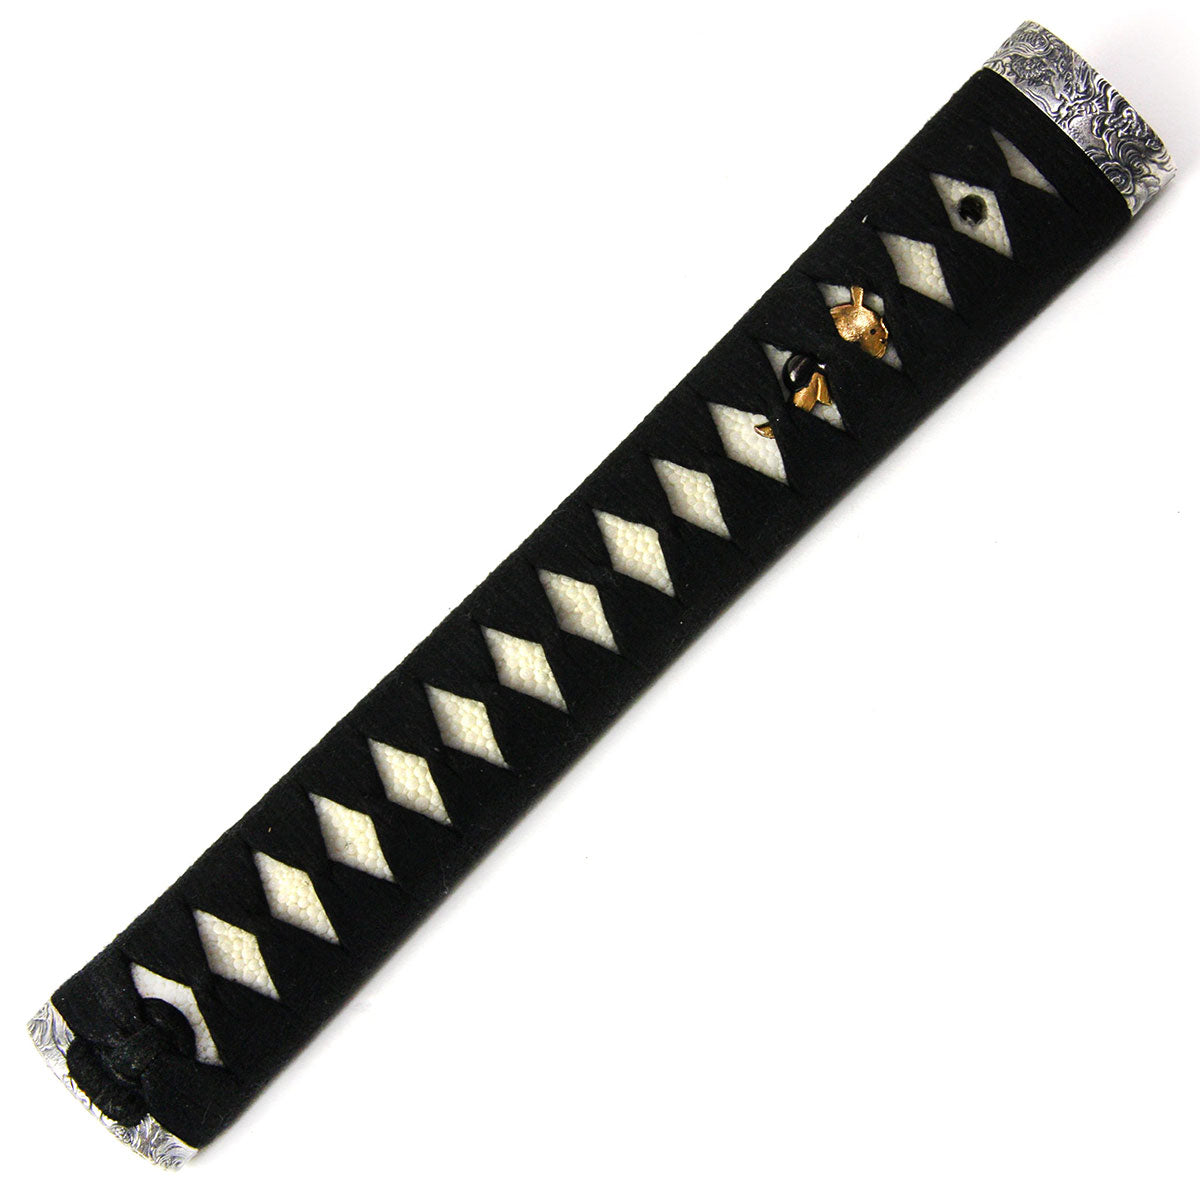 A properly wrapped tsuka of Japanese sword Katana with uniformly formed diamonds along the whole length of the tsuka